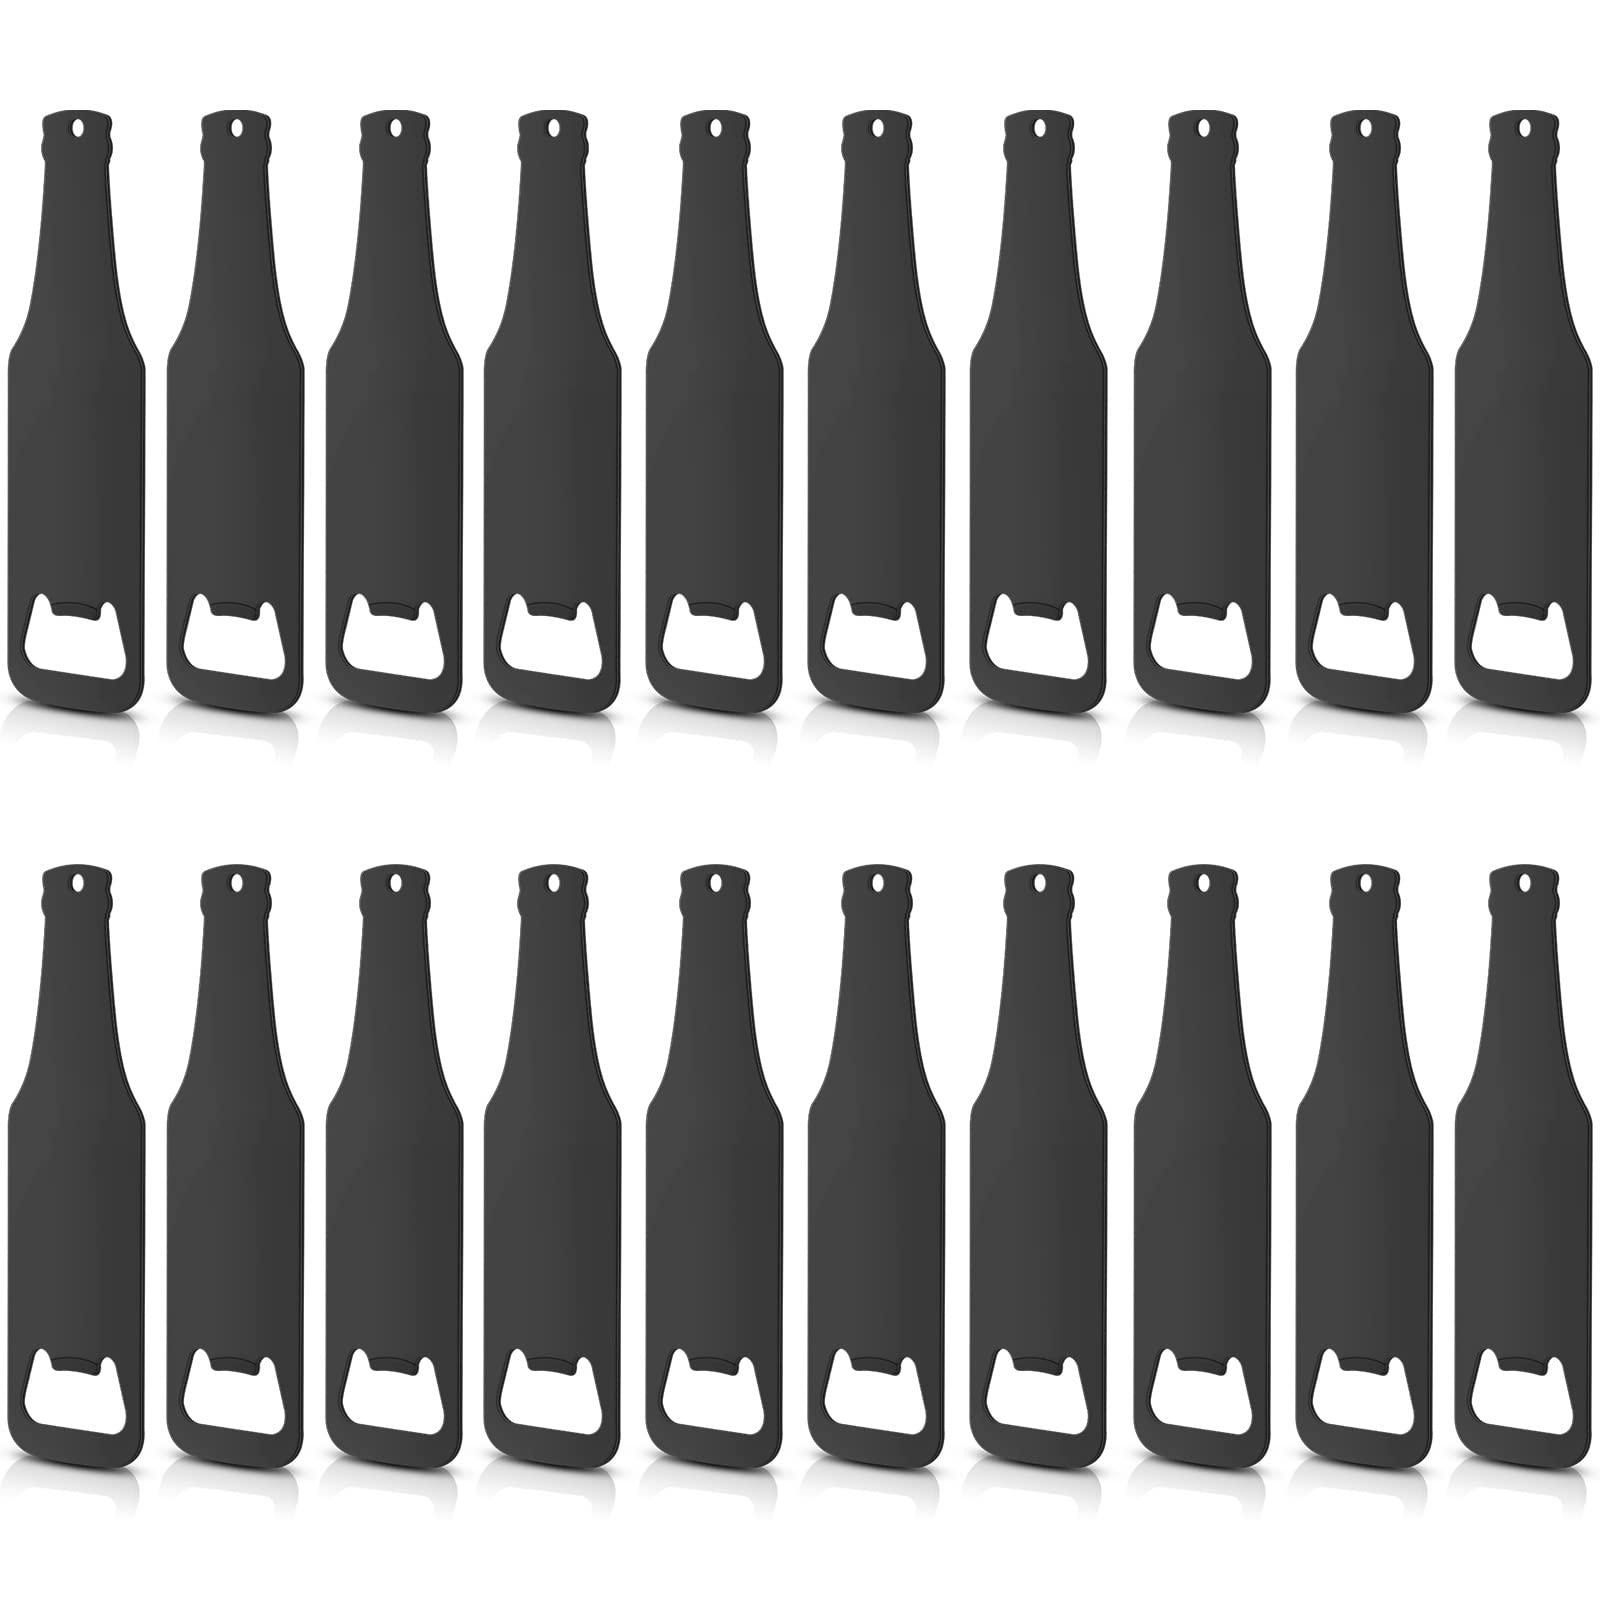 30 Pieces Stainless Steel Flat Bottle Opener Groomsmen Wallet Beer Bottle Opener for Kitchen, Bar, Restaurant, Wedding Bridesmaid Favor, Black